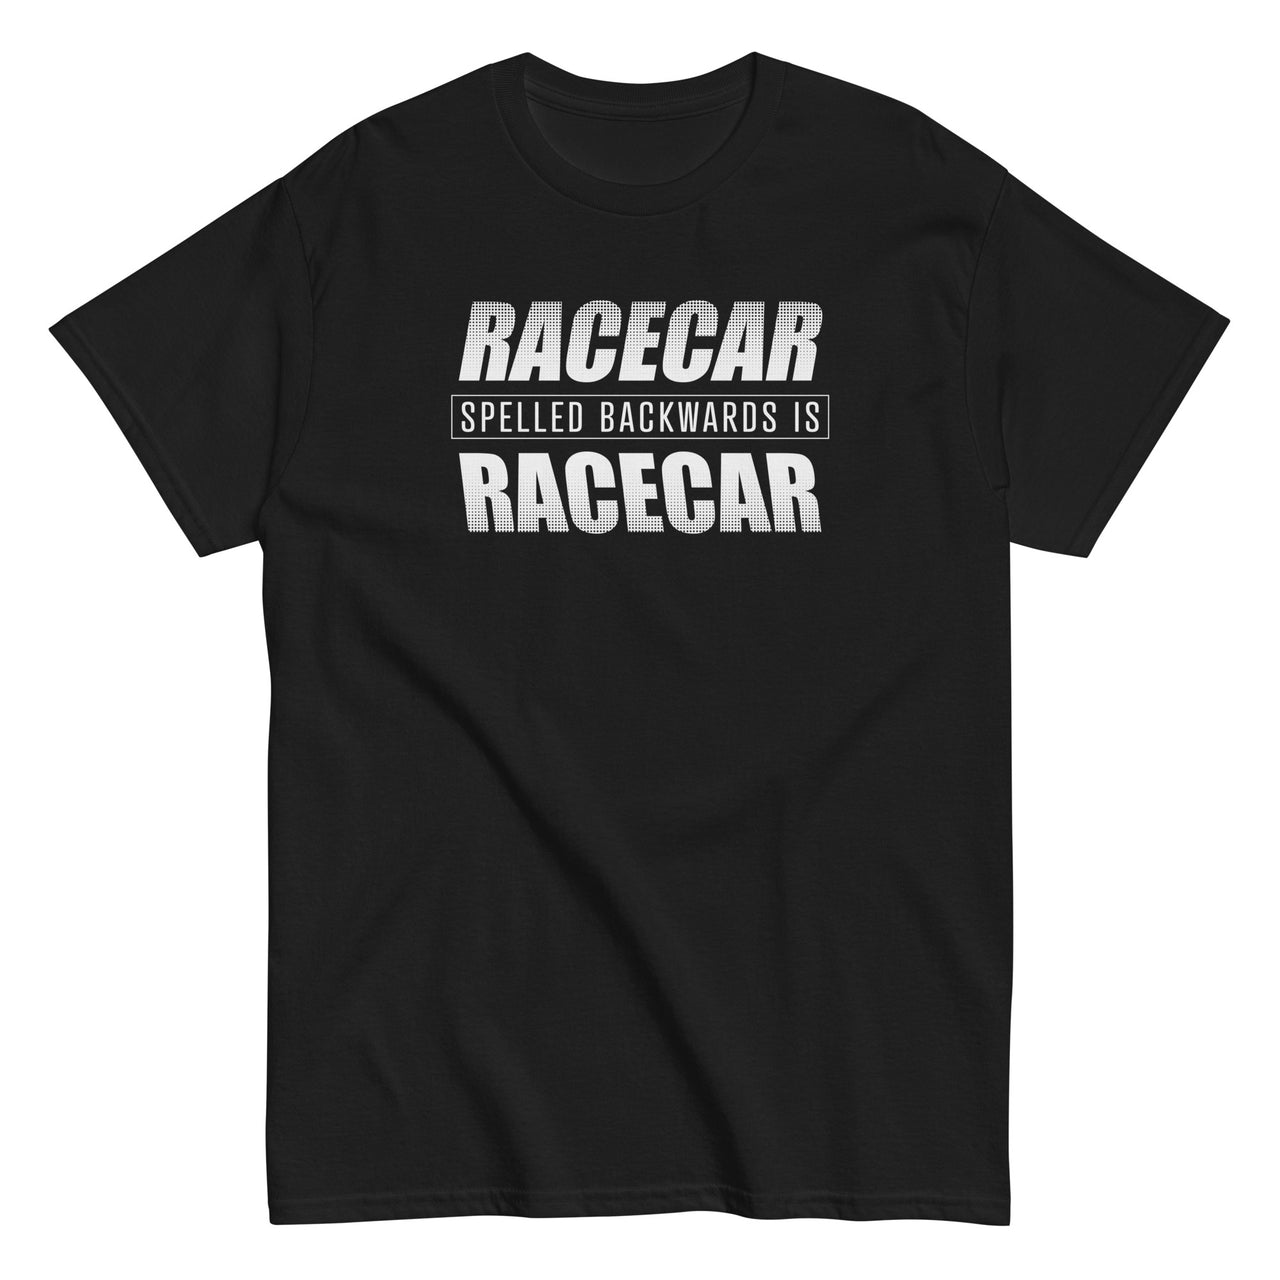 Funny Racecar Shirt, Car Enthusiast Gift, Drag Racing, or Racecar T-Shirt in black